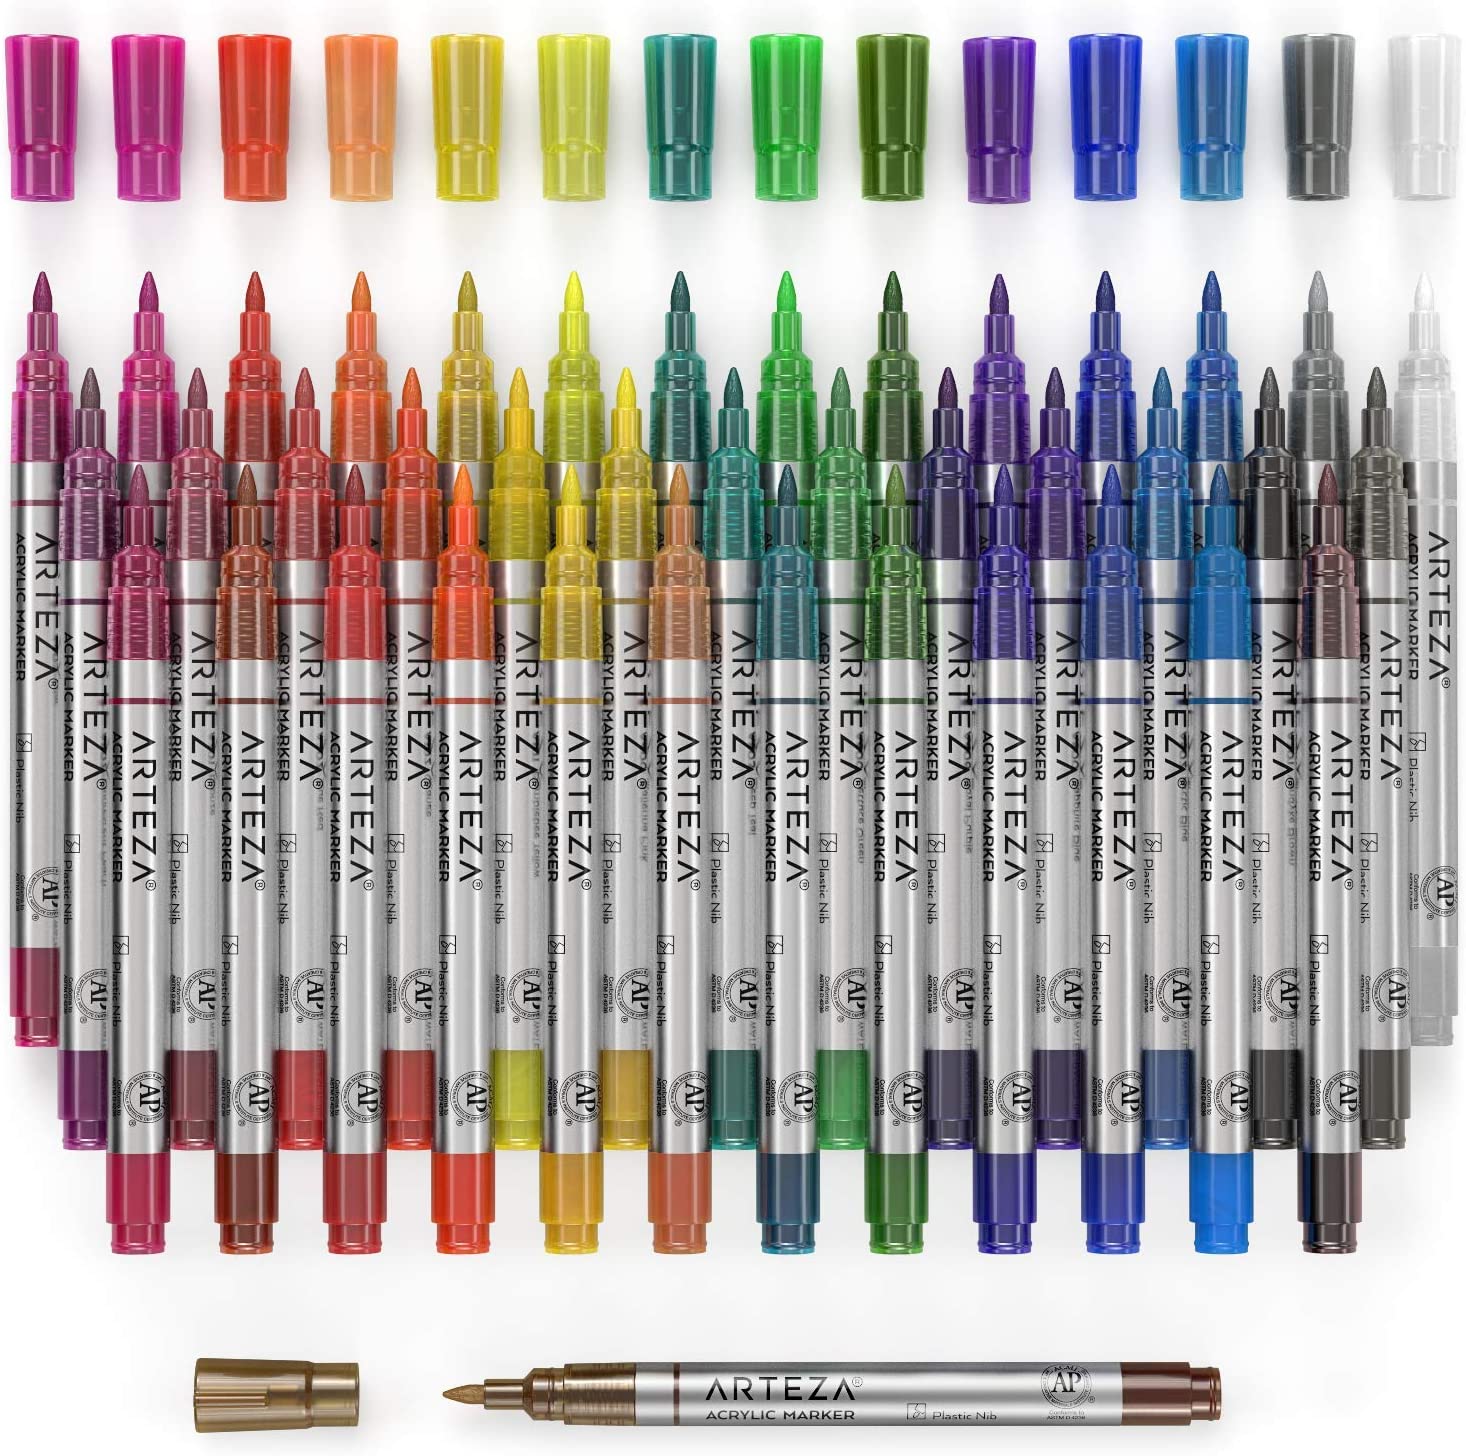 ARTEZA Acrylic Paint Pens close up